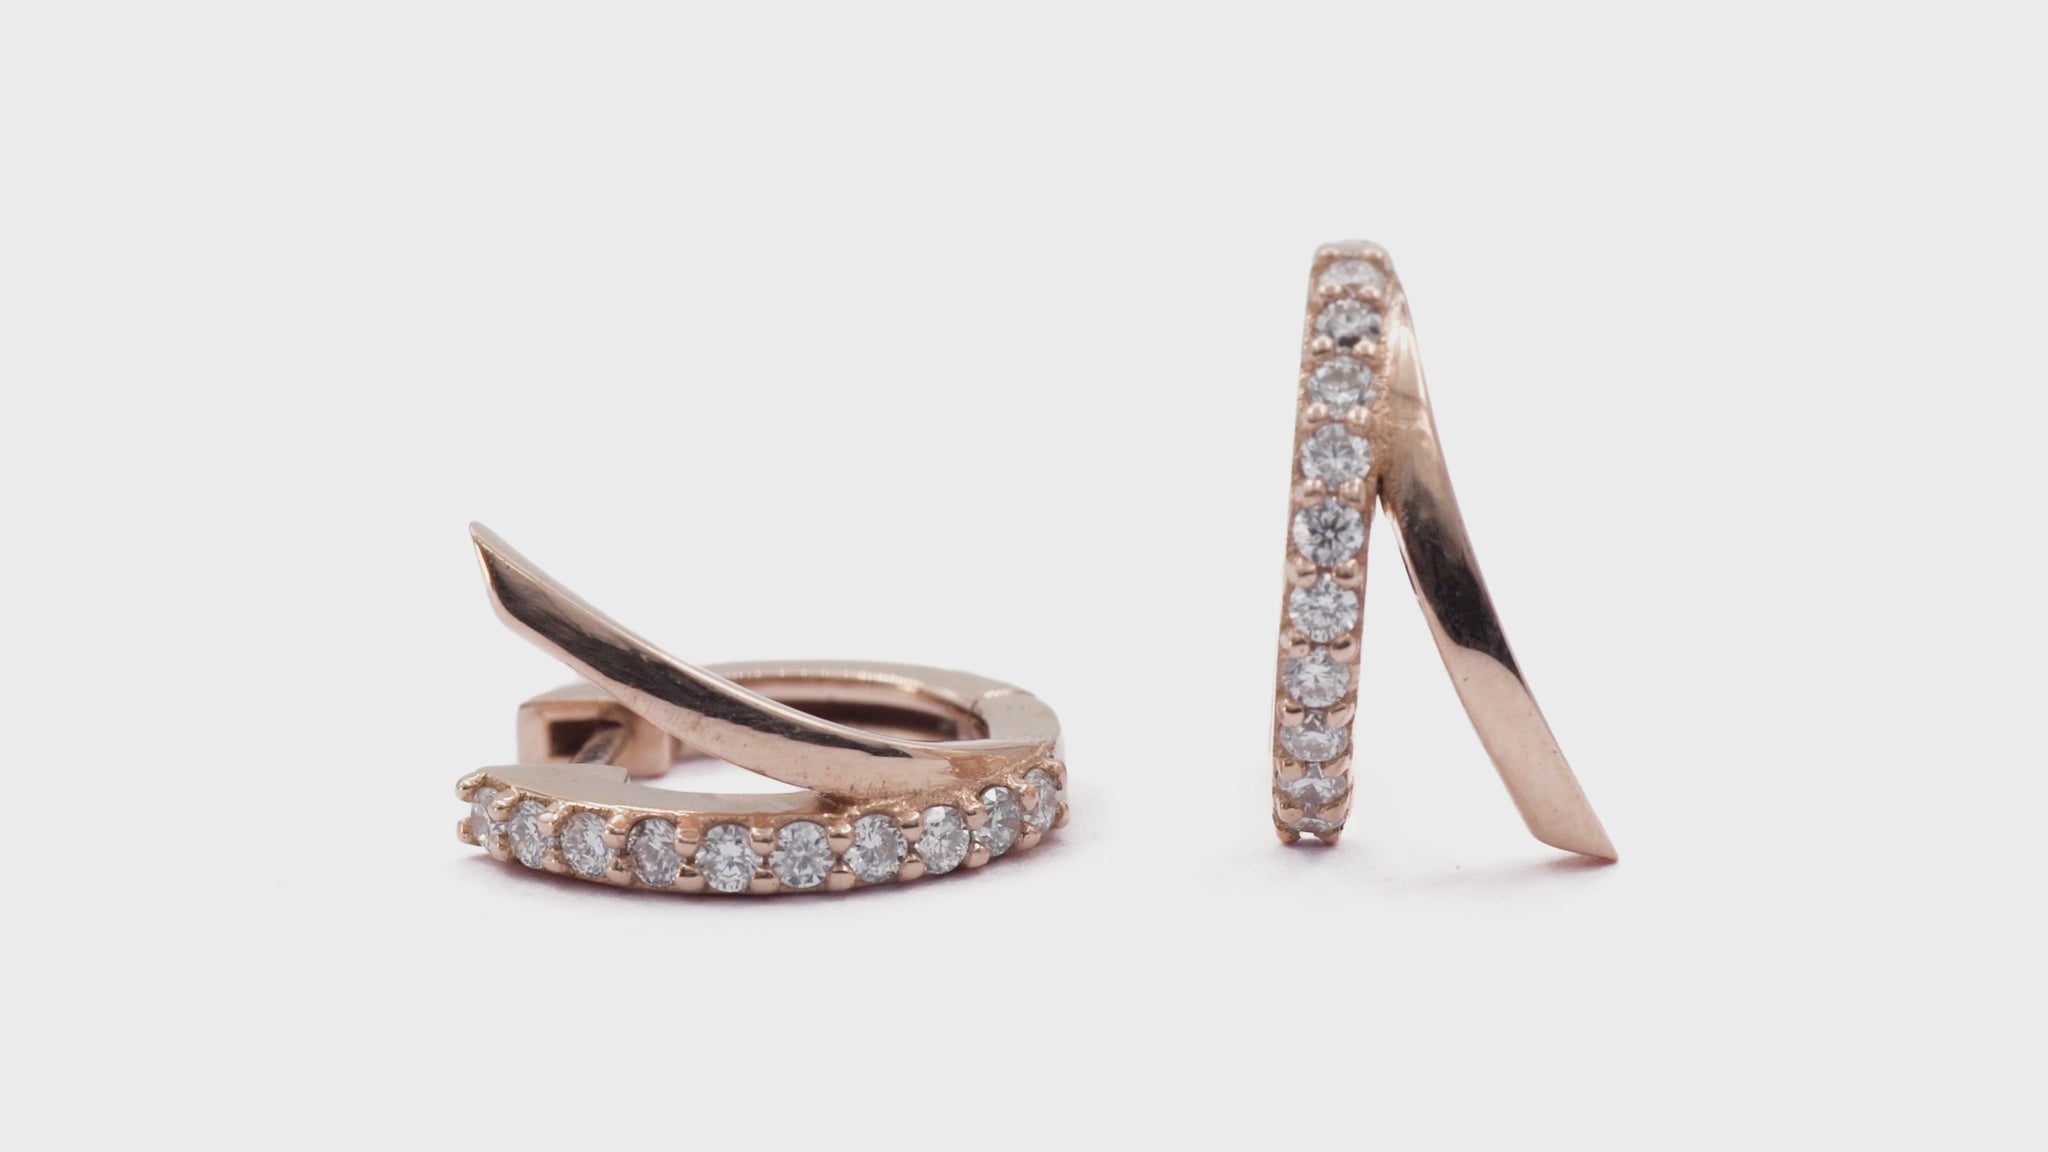 Criollas V earrings - 18K recycled gold lab-grown diamond earrings - The Future Rocks 